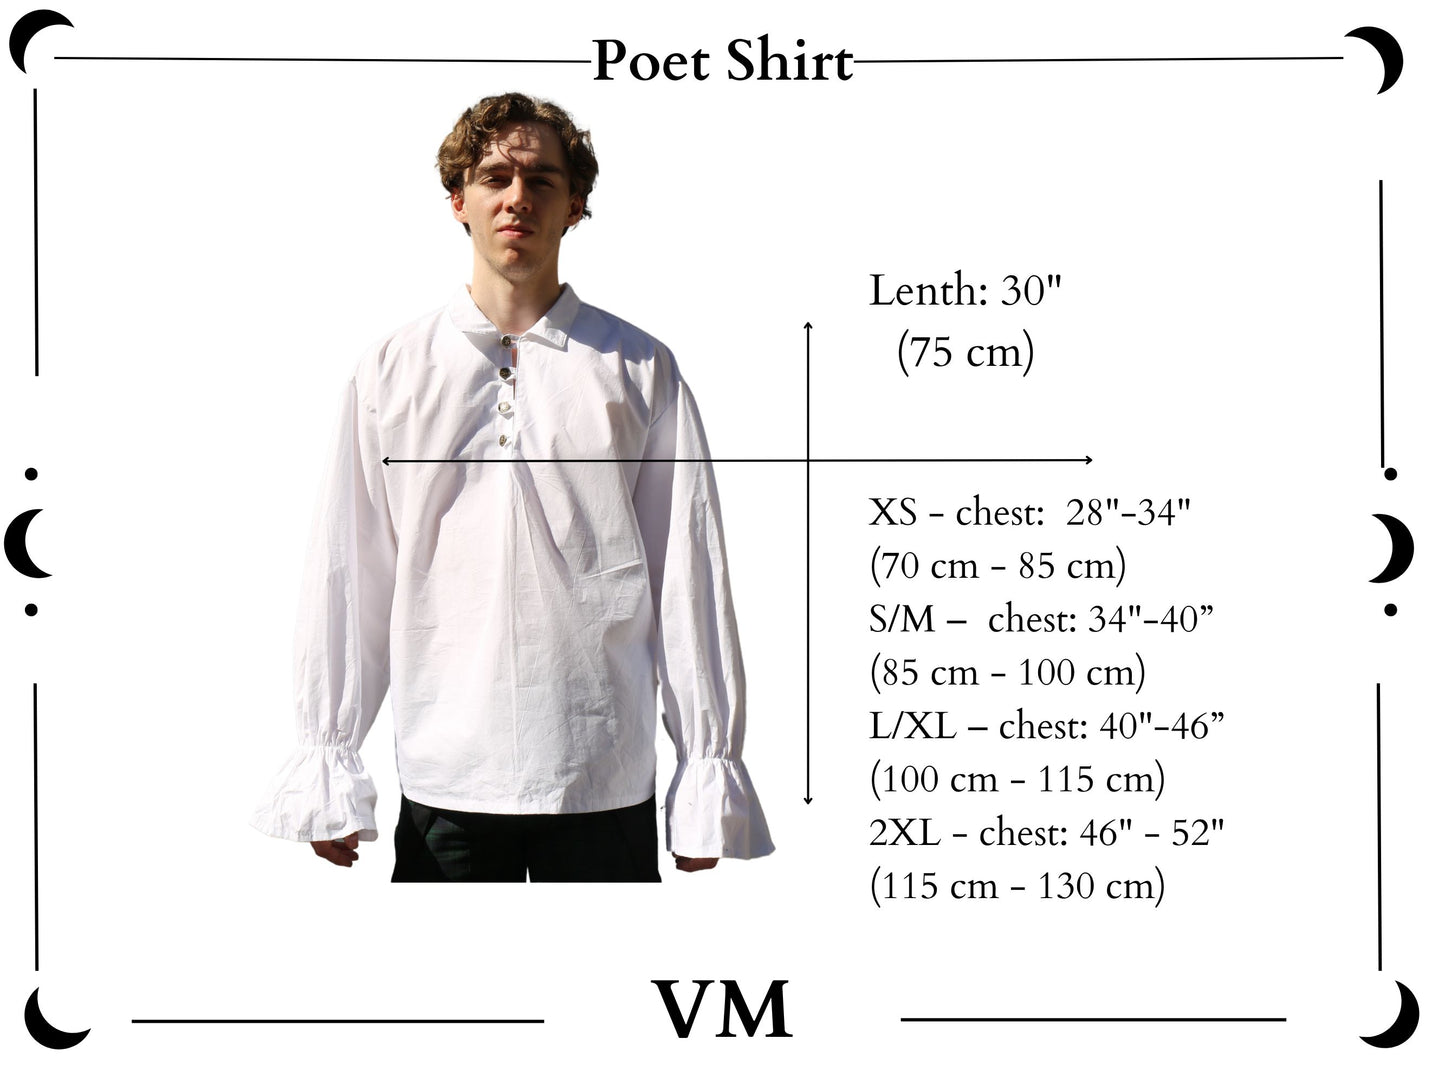 The VM Ruffle Poet Shirt